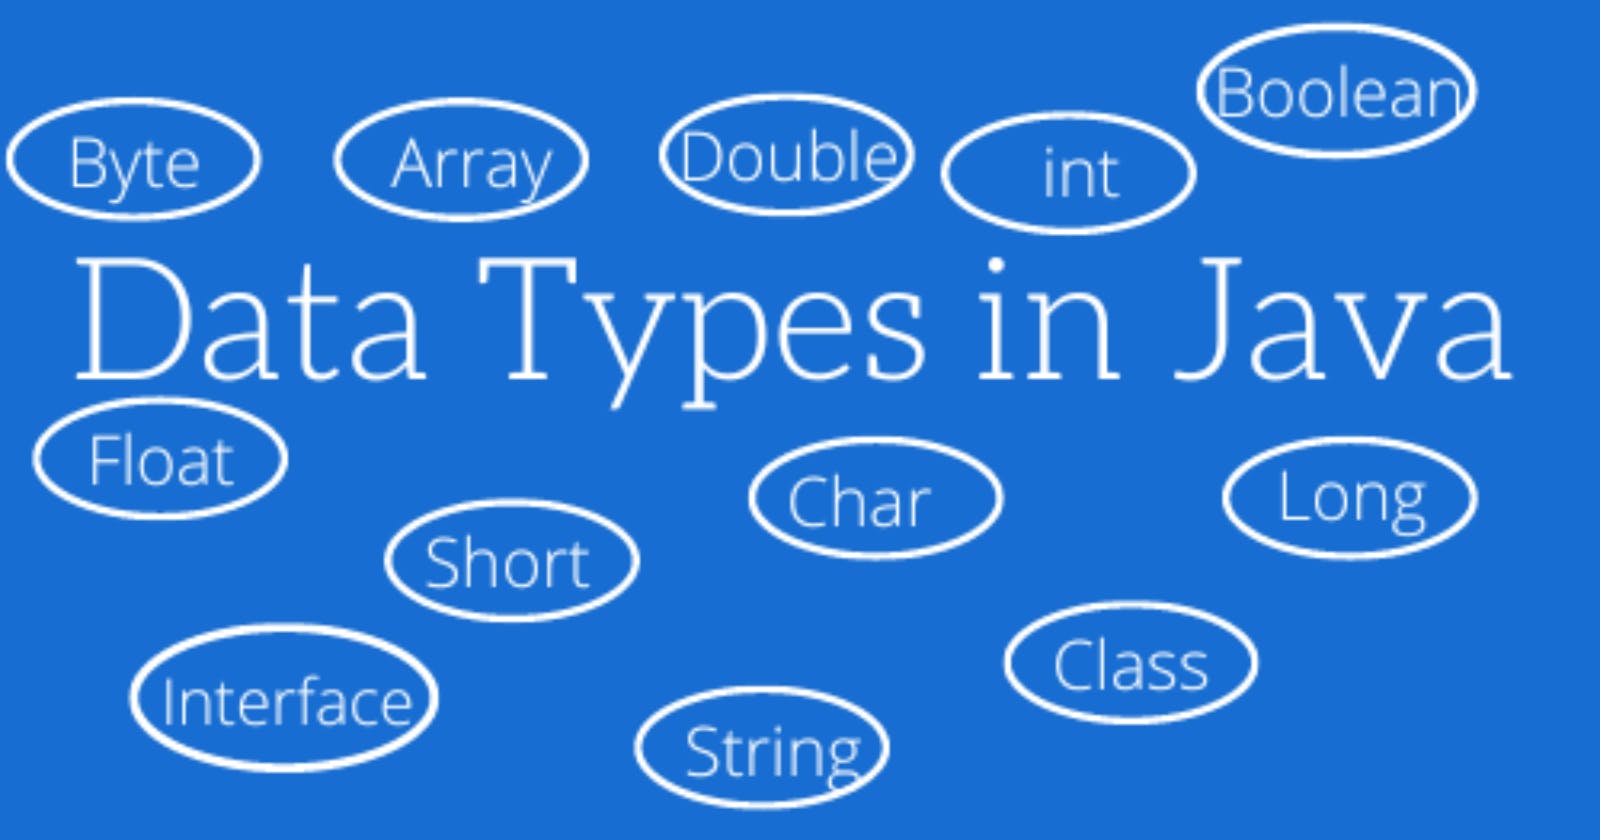 Data type types in Java